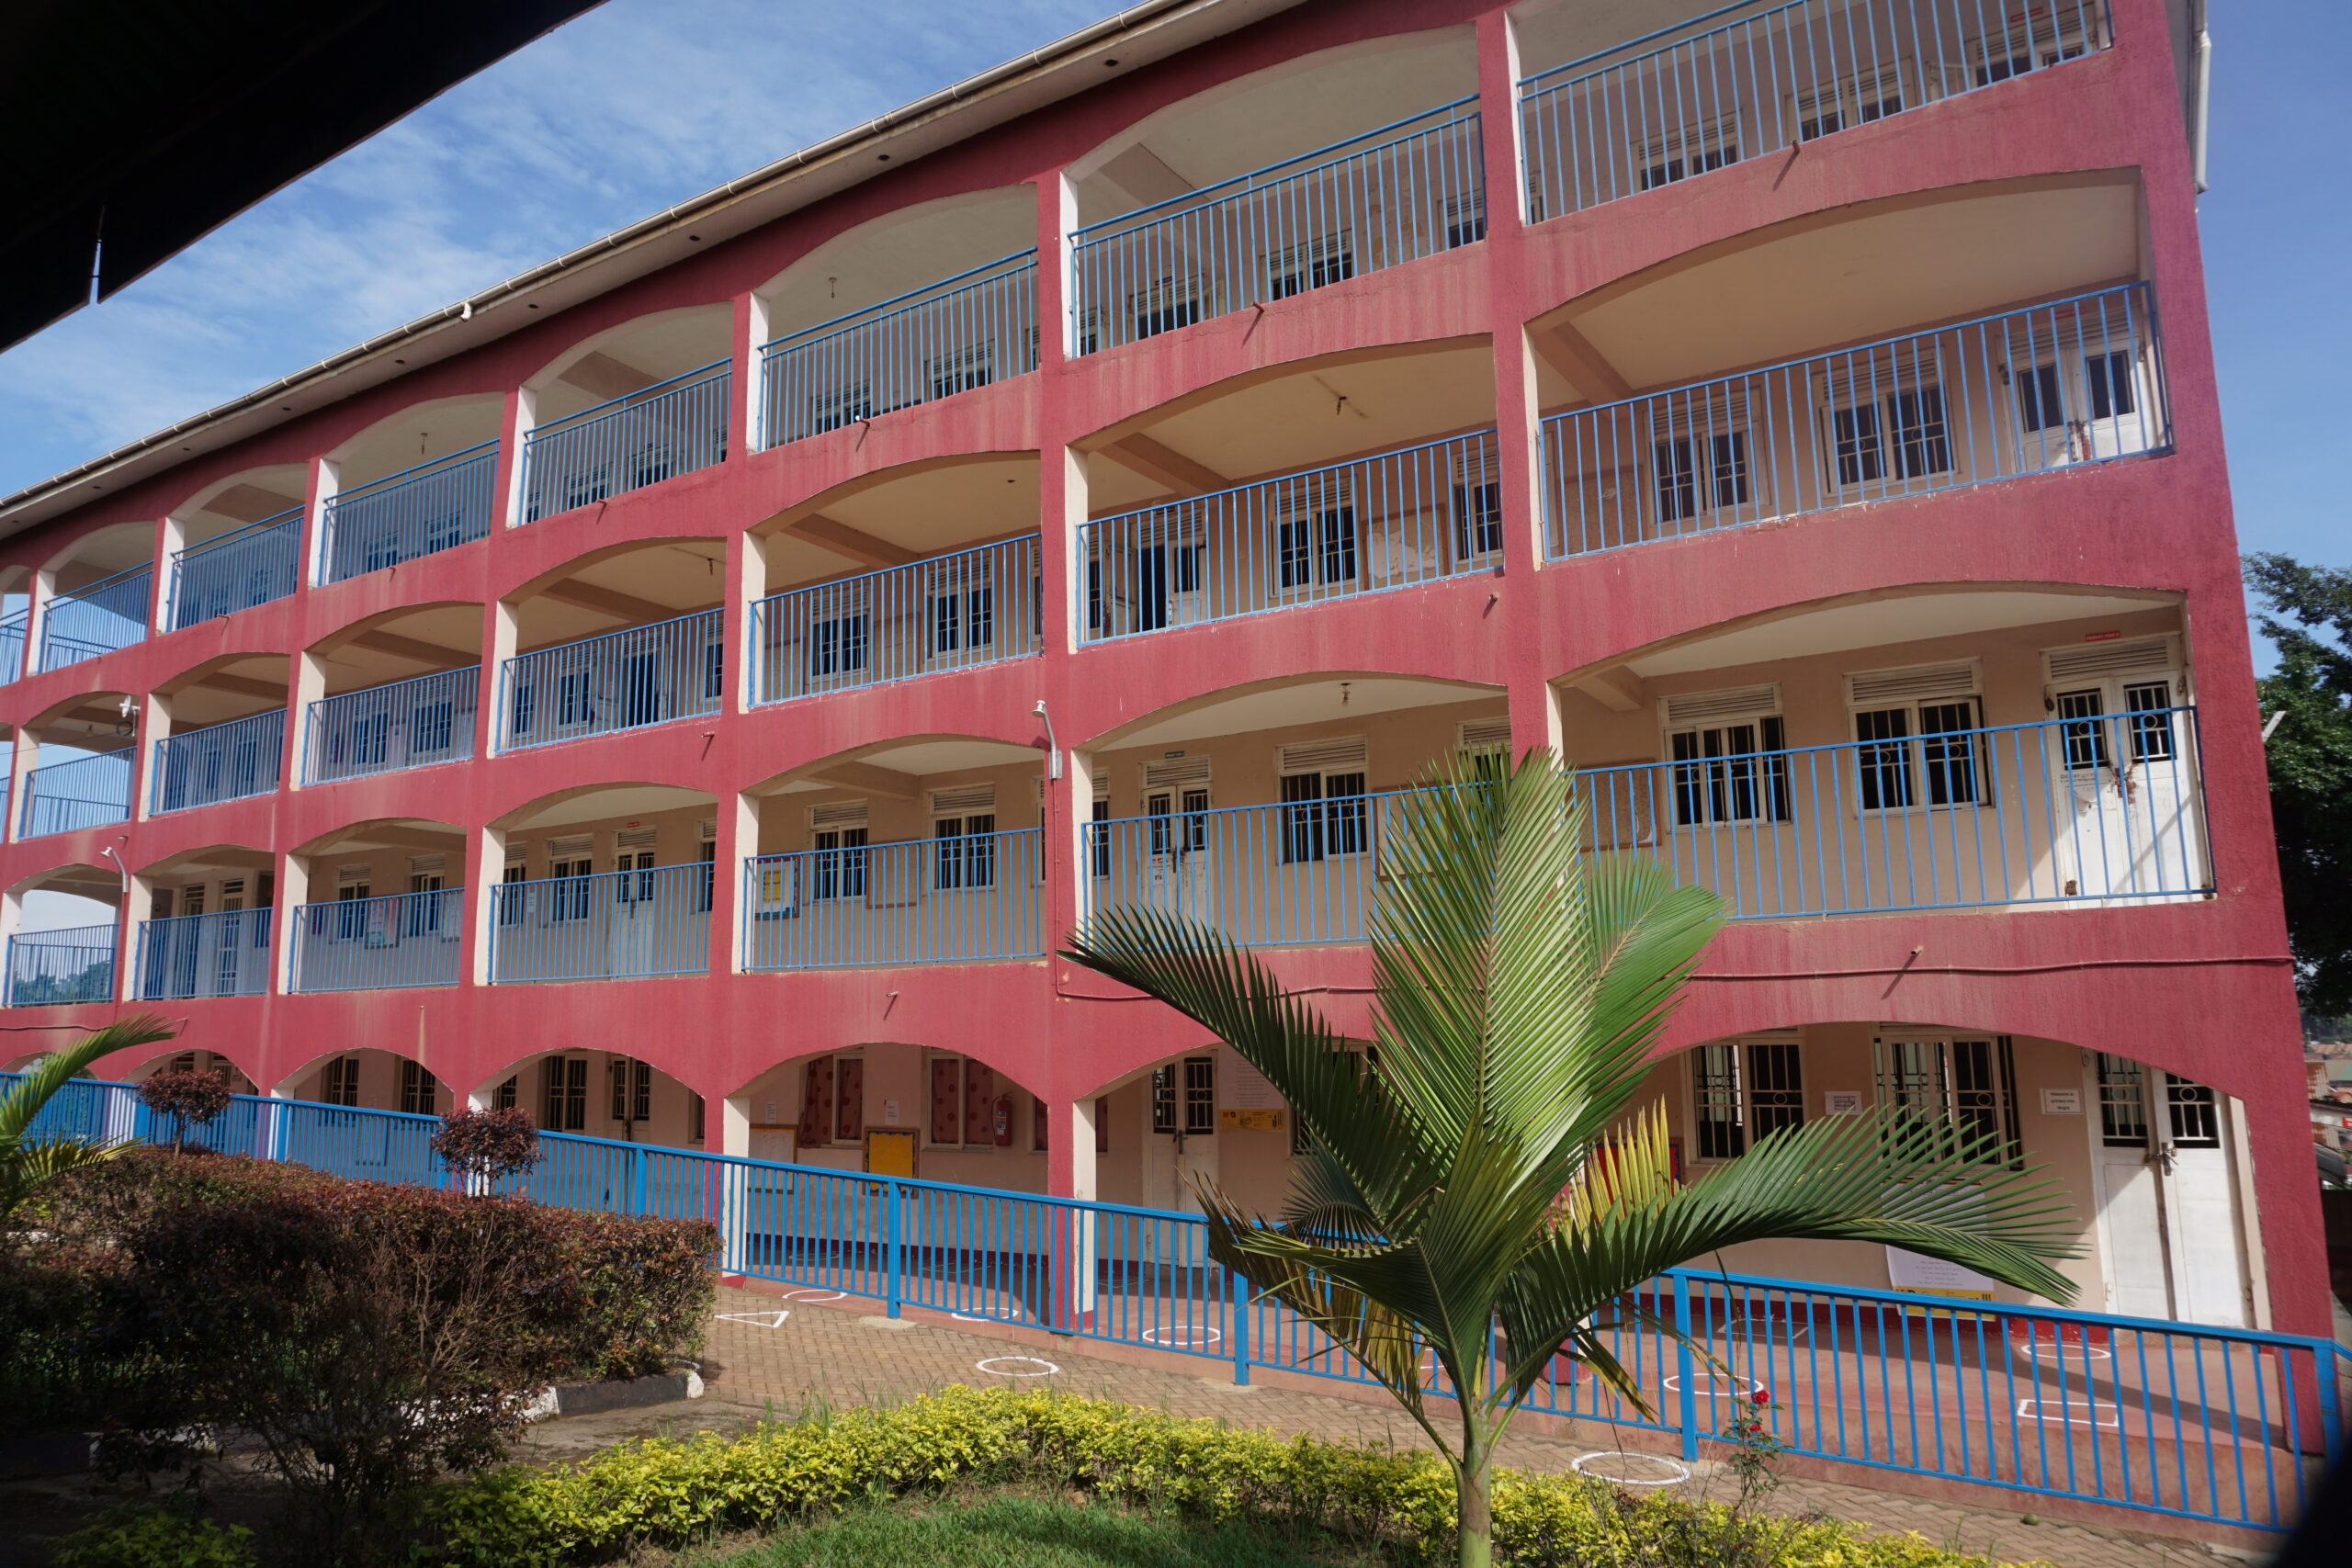 Kampala Academy primary school